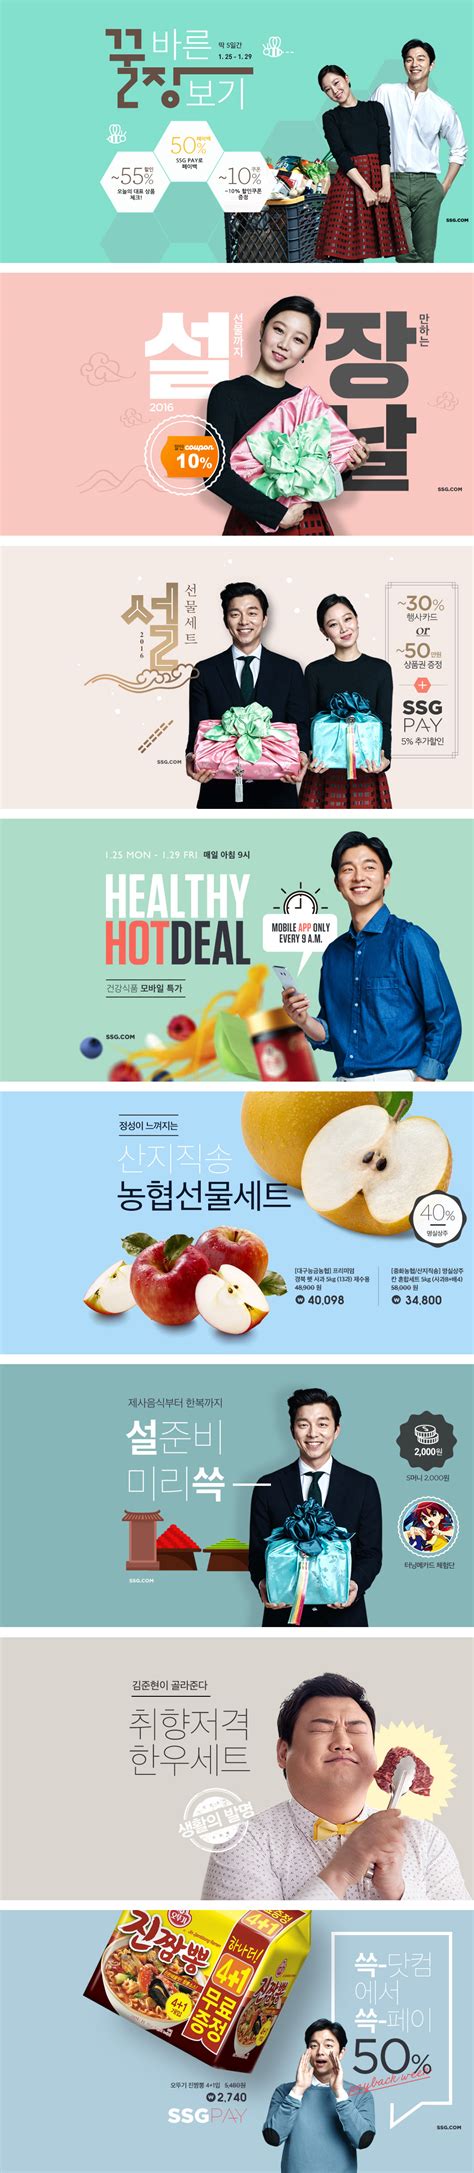 韩国购物网站emart banner欣赏专题页设计